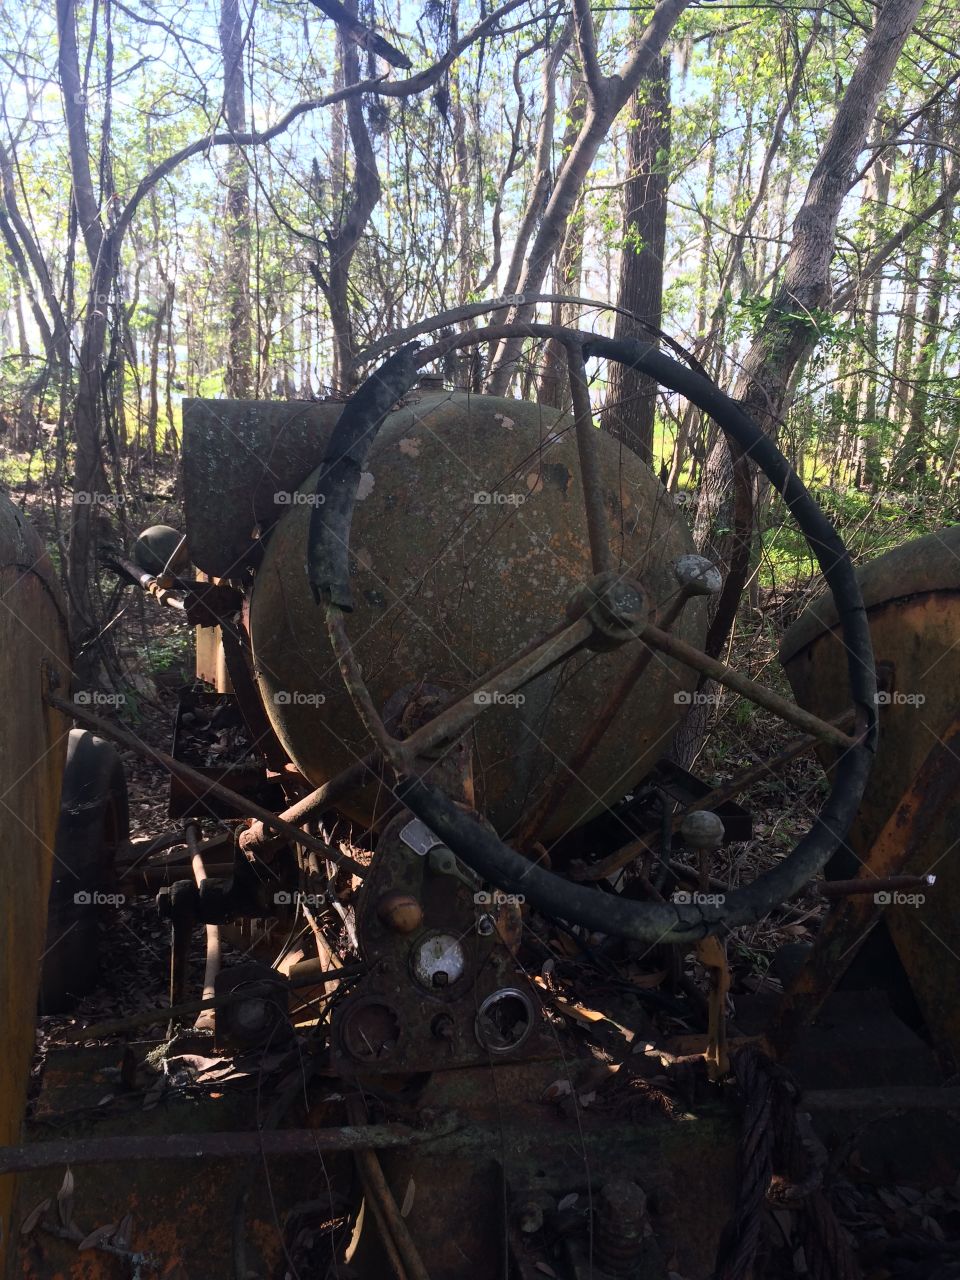 Minneapolis Moline steering wheel abandoned tractor